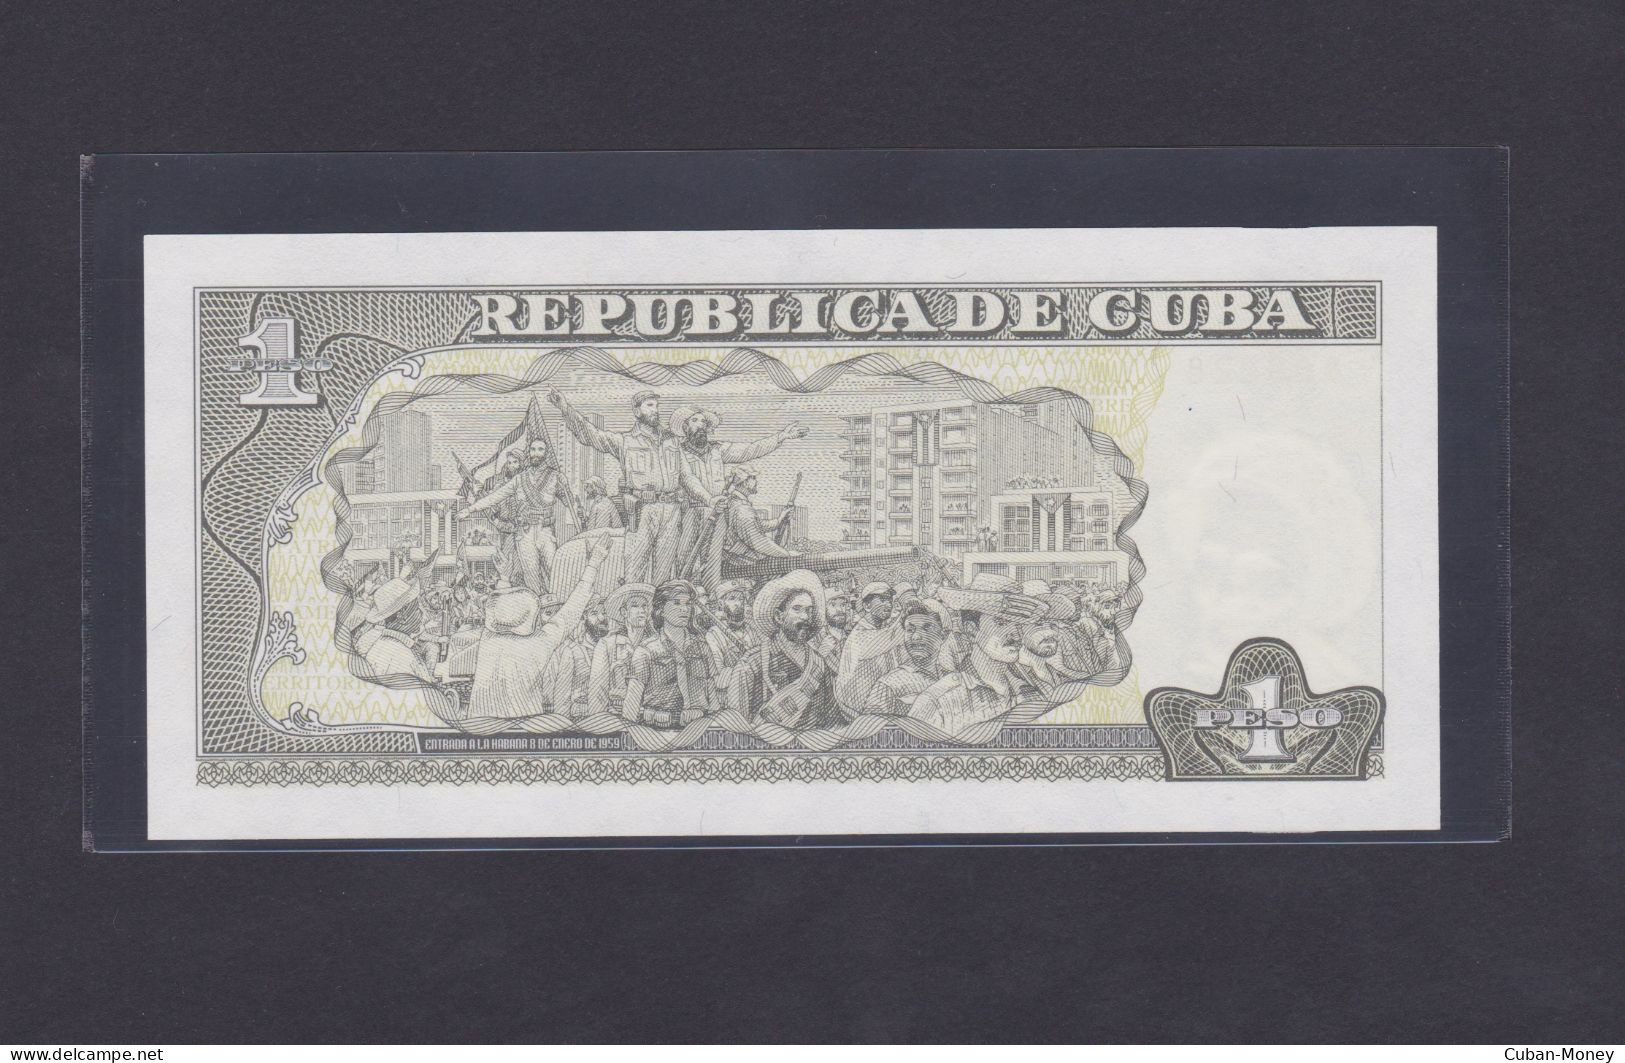 Cuba 1 Peso 2010 SC / UNC - Kuba